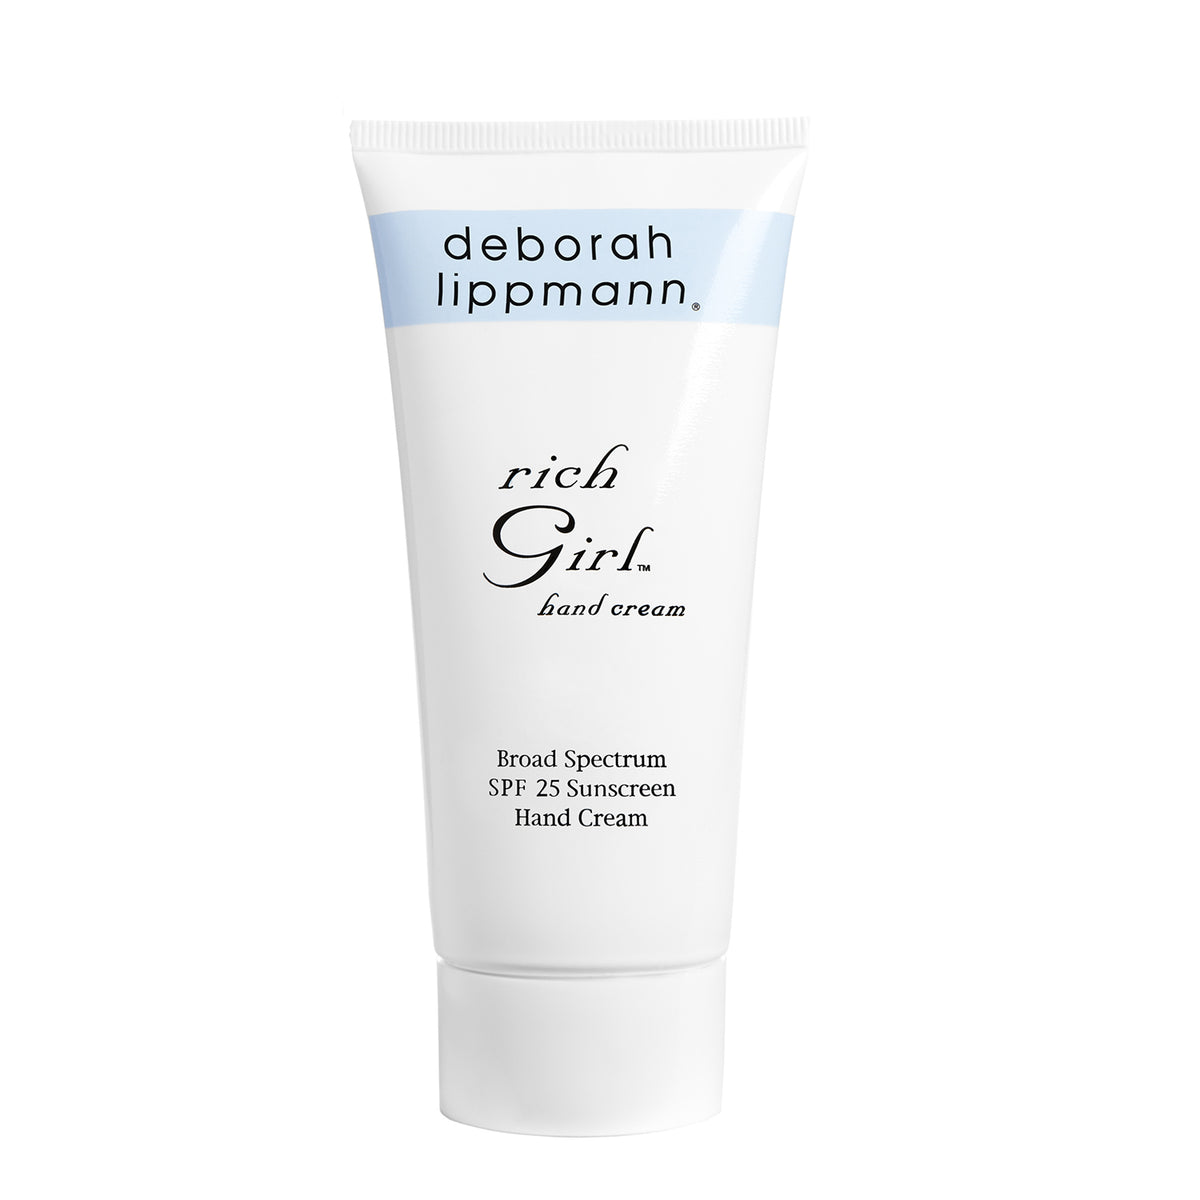 Rich Girl - SPF Hand Cream - Deborah Lippmann